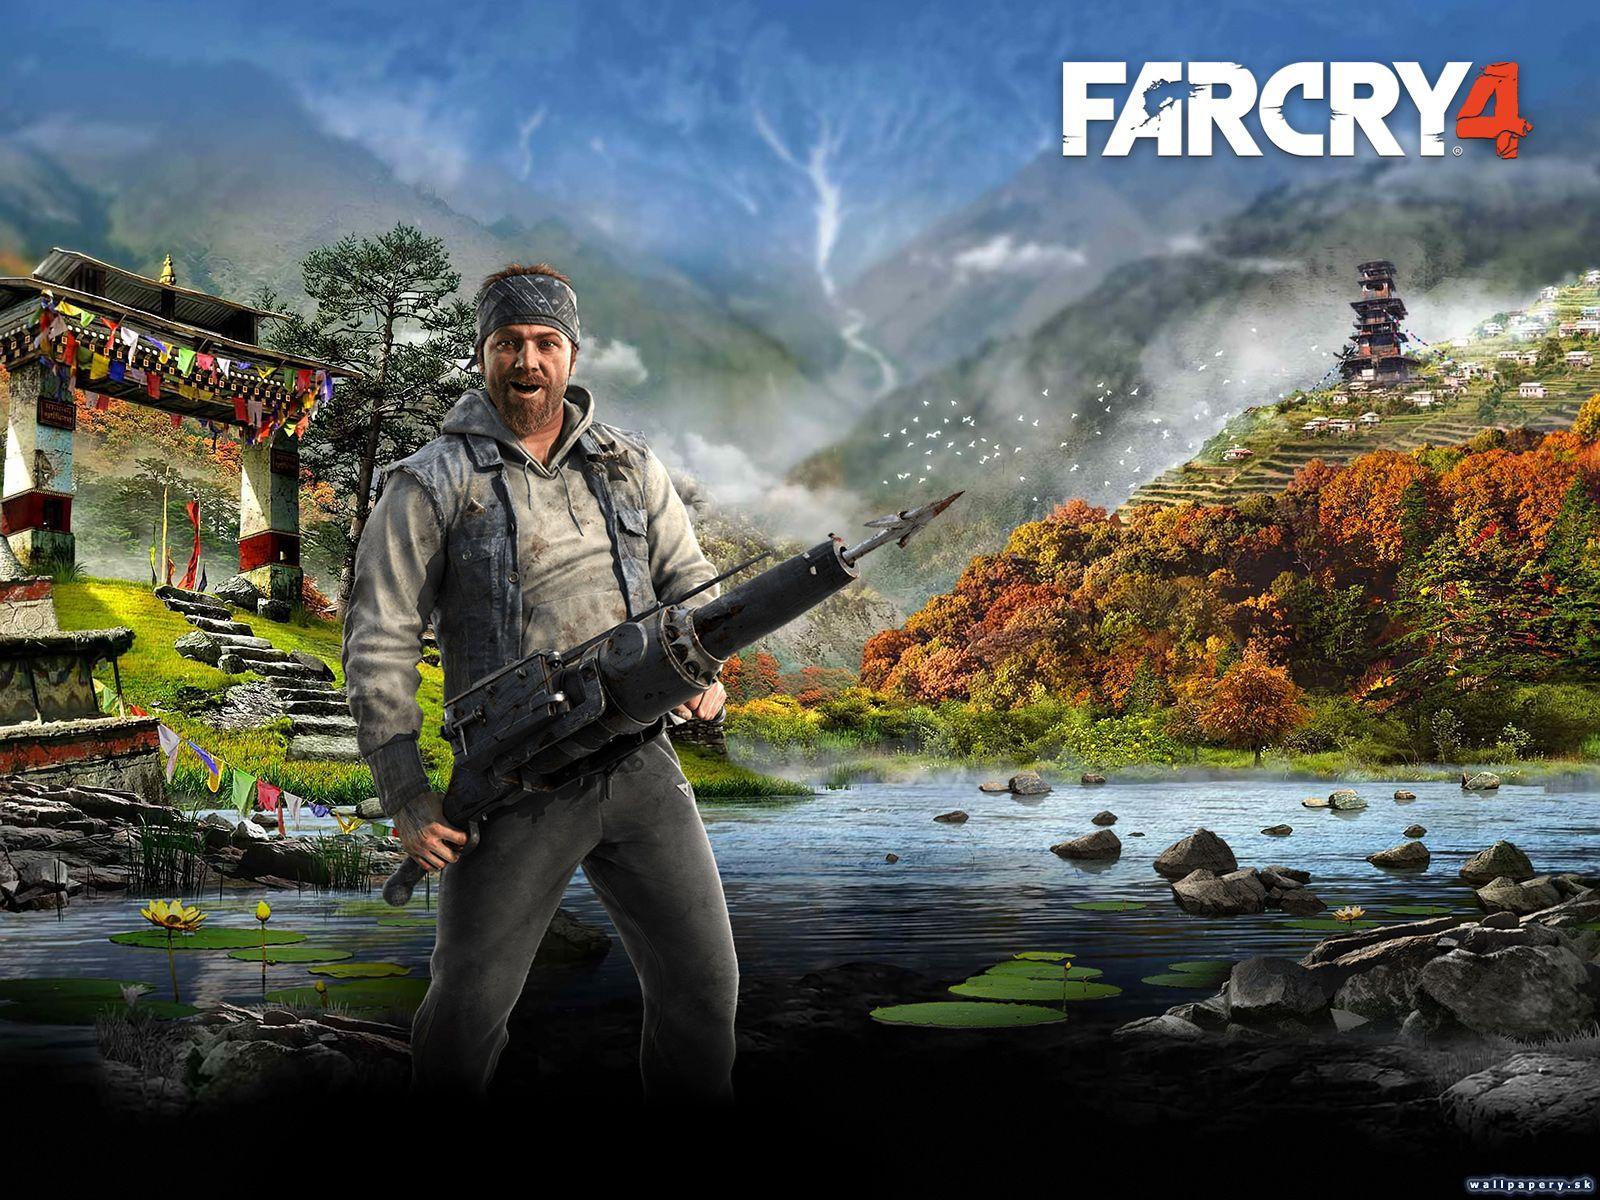 Best Far Cry 4 wallpaper UltraCollex